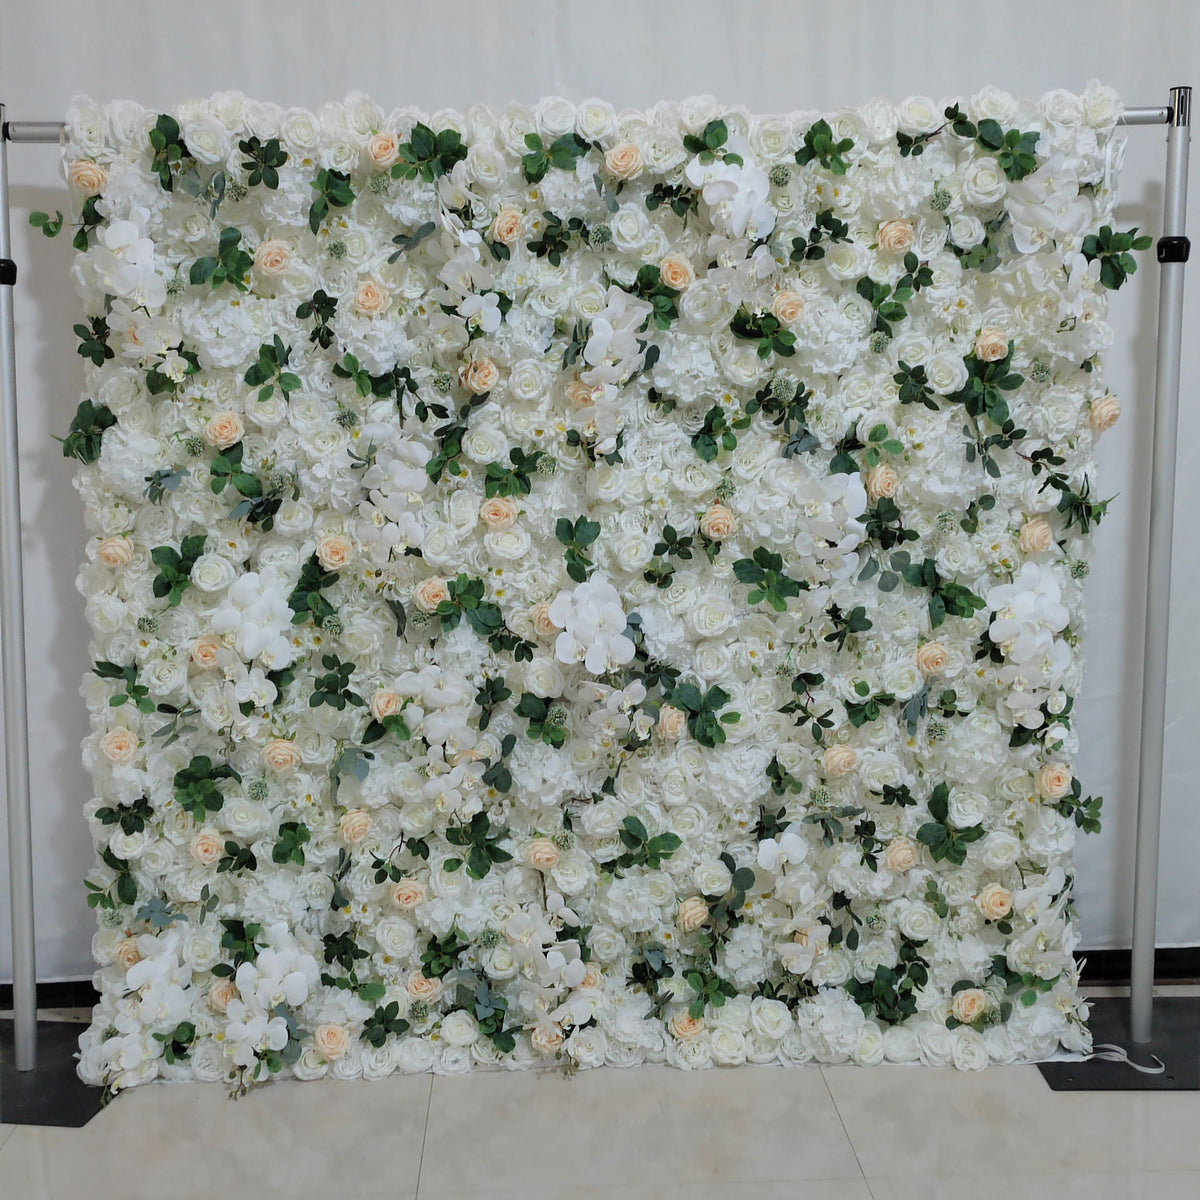 3D Artificial Flower Wall Arrangement Wedding Party Birthday Backdrop Decor HQ3763